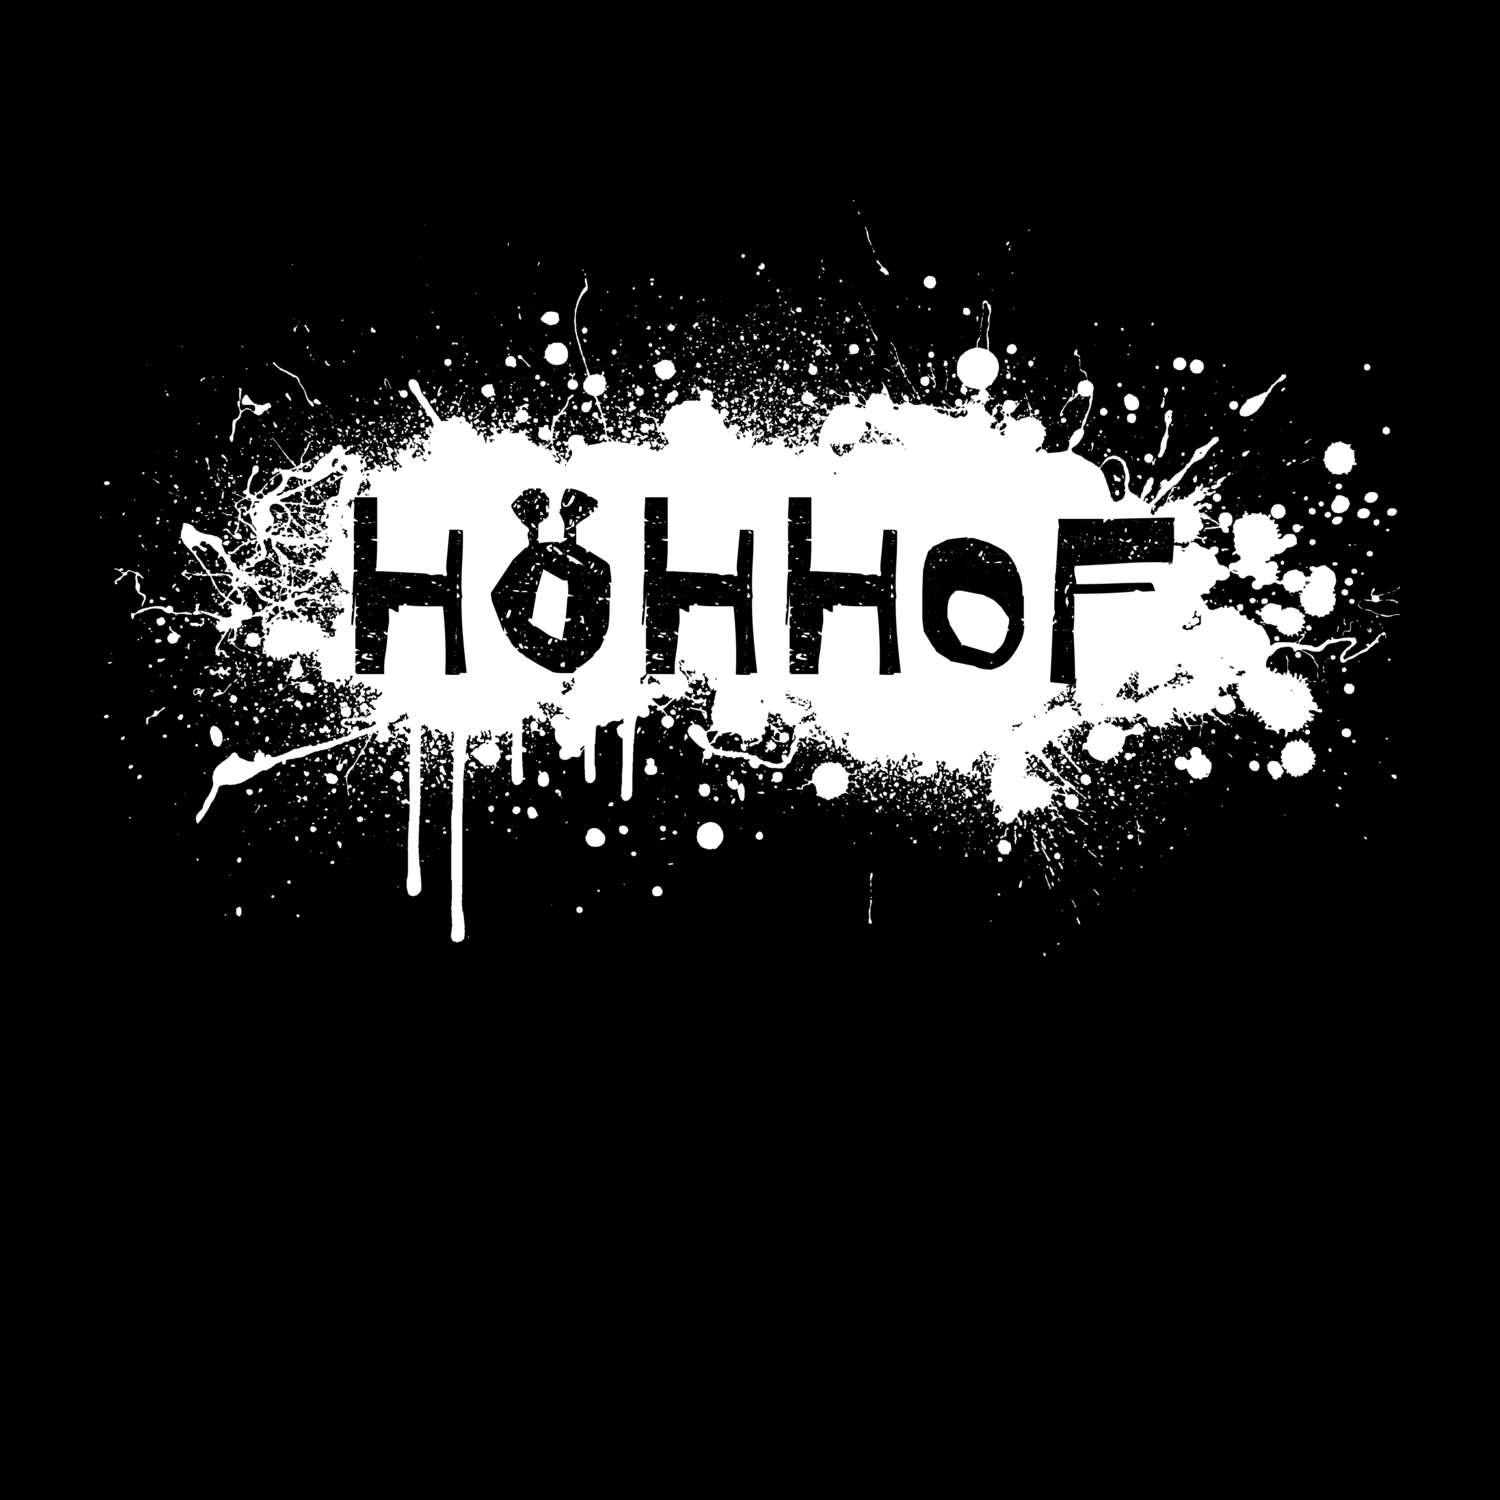 Höhhof T-Shirt »Paint Splash Punk«